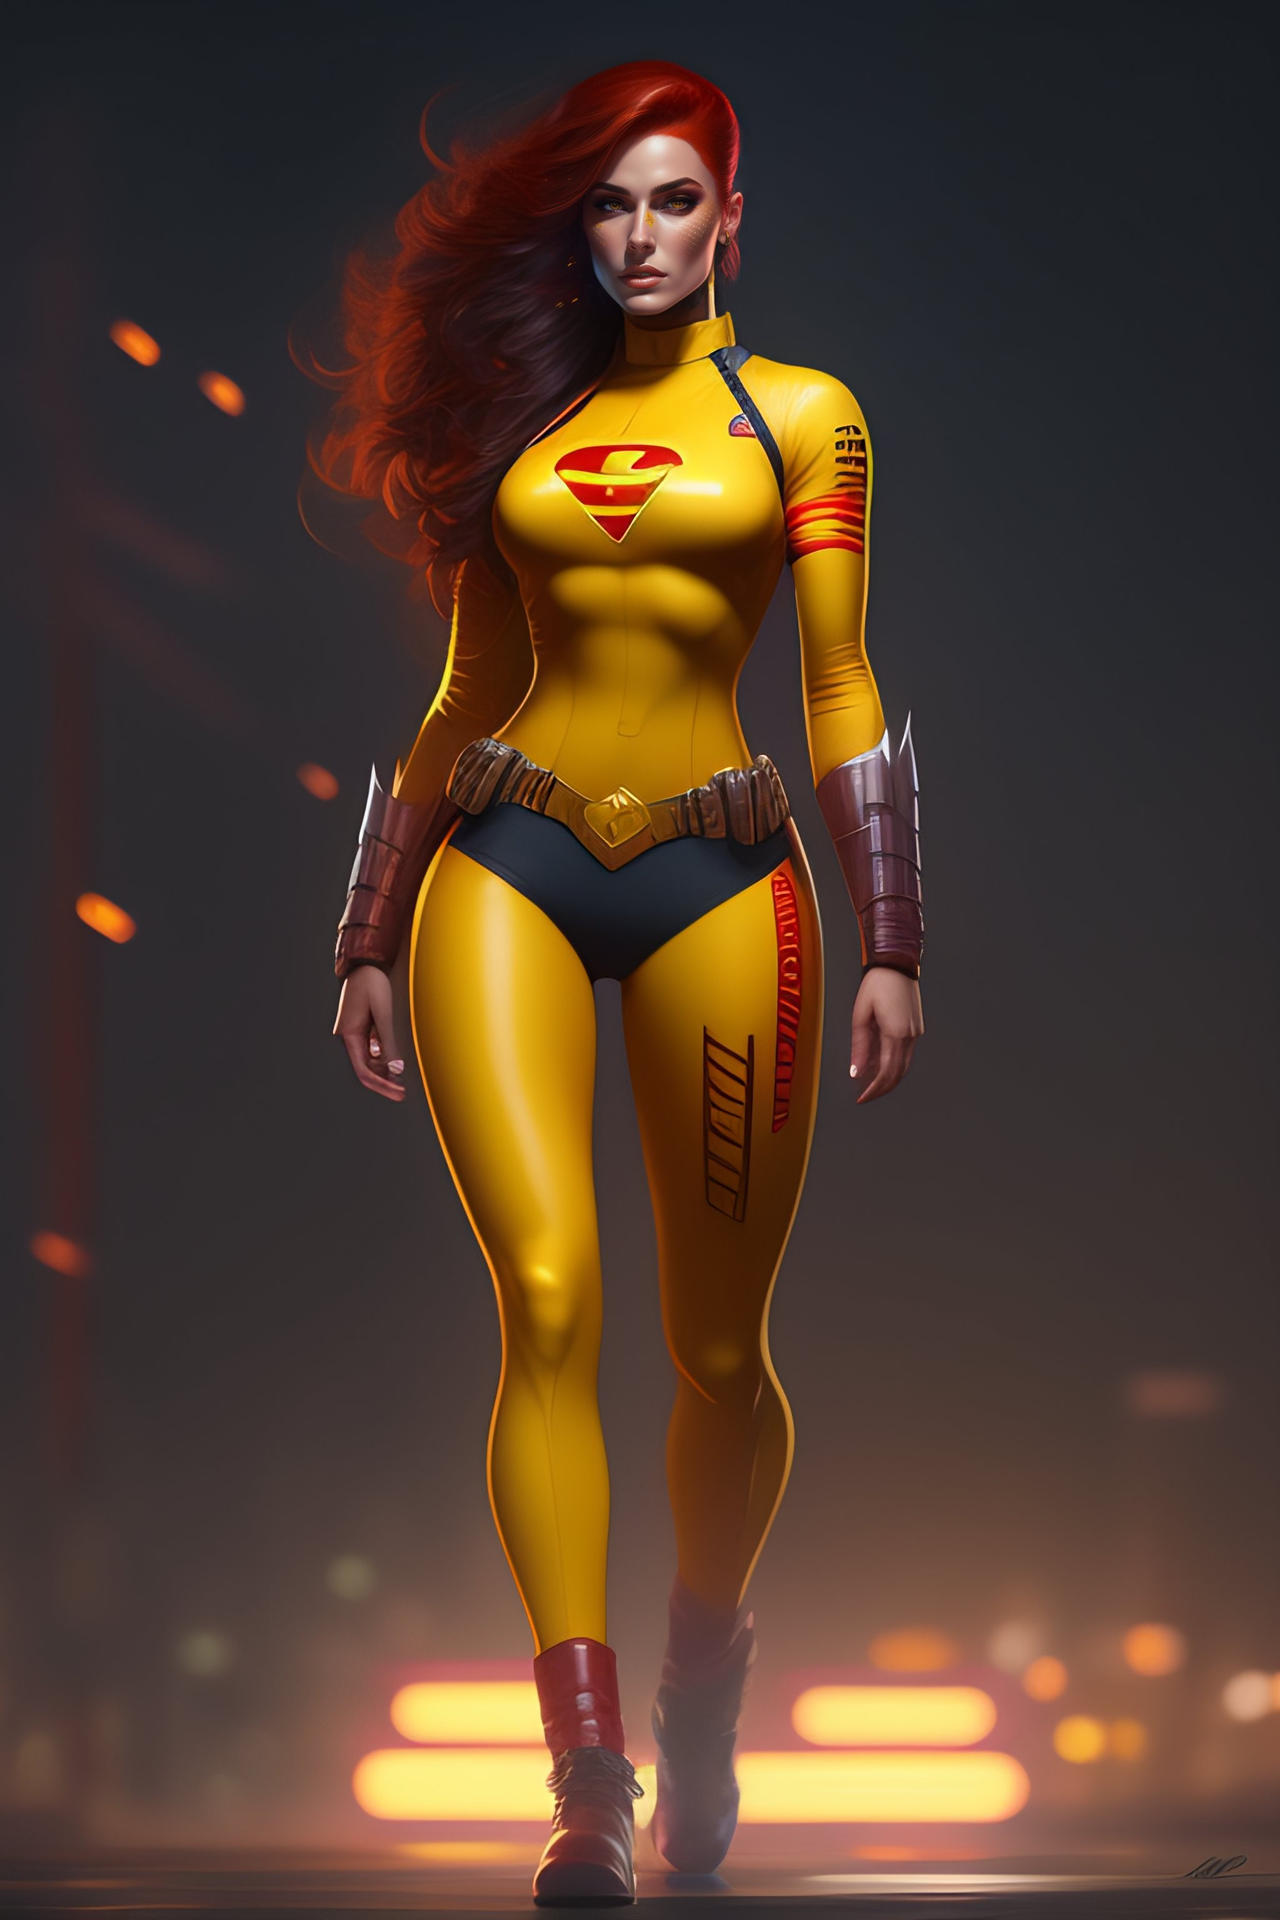 Superwoman Bundle